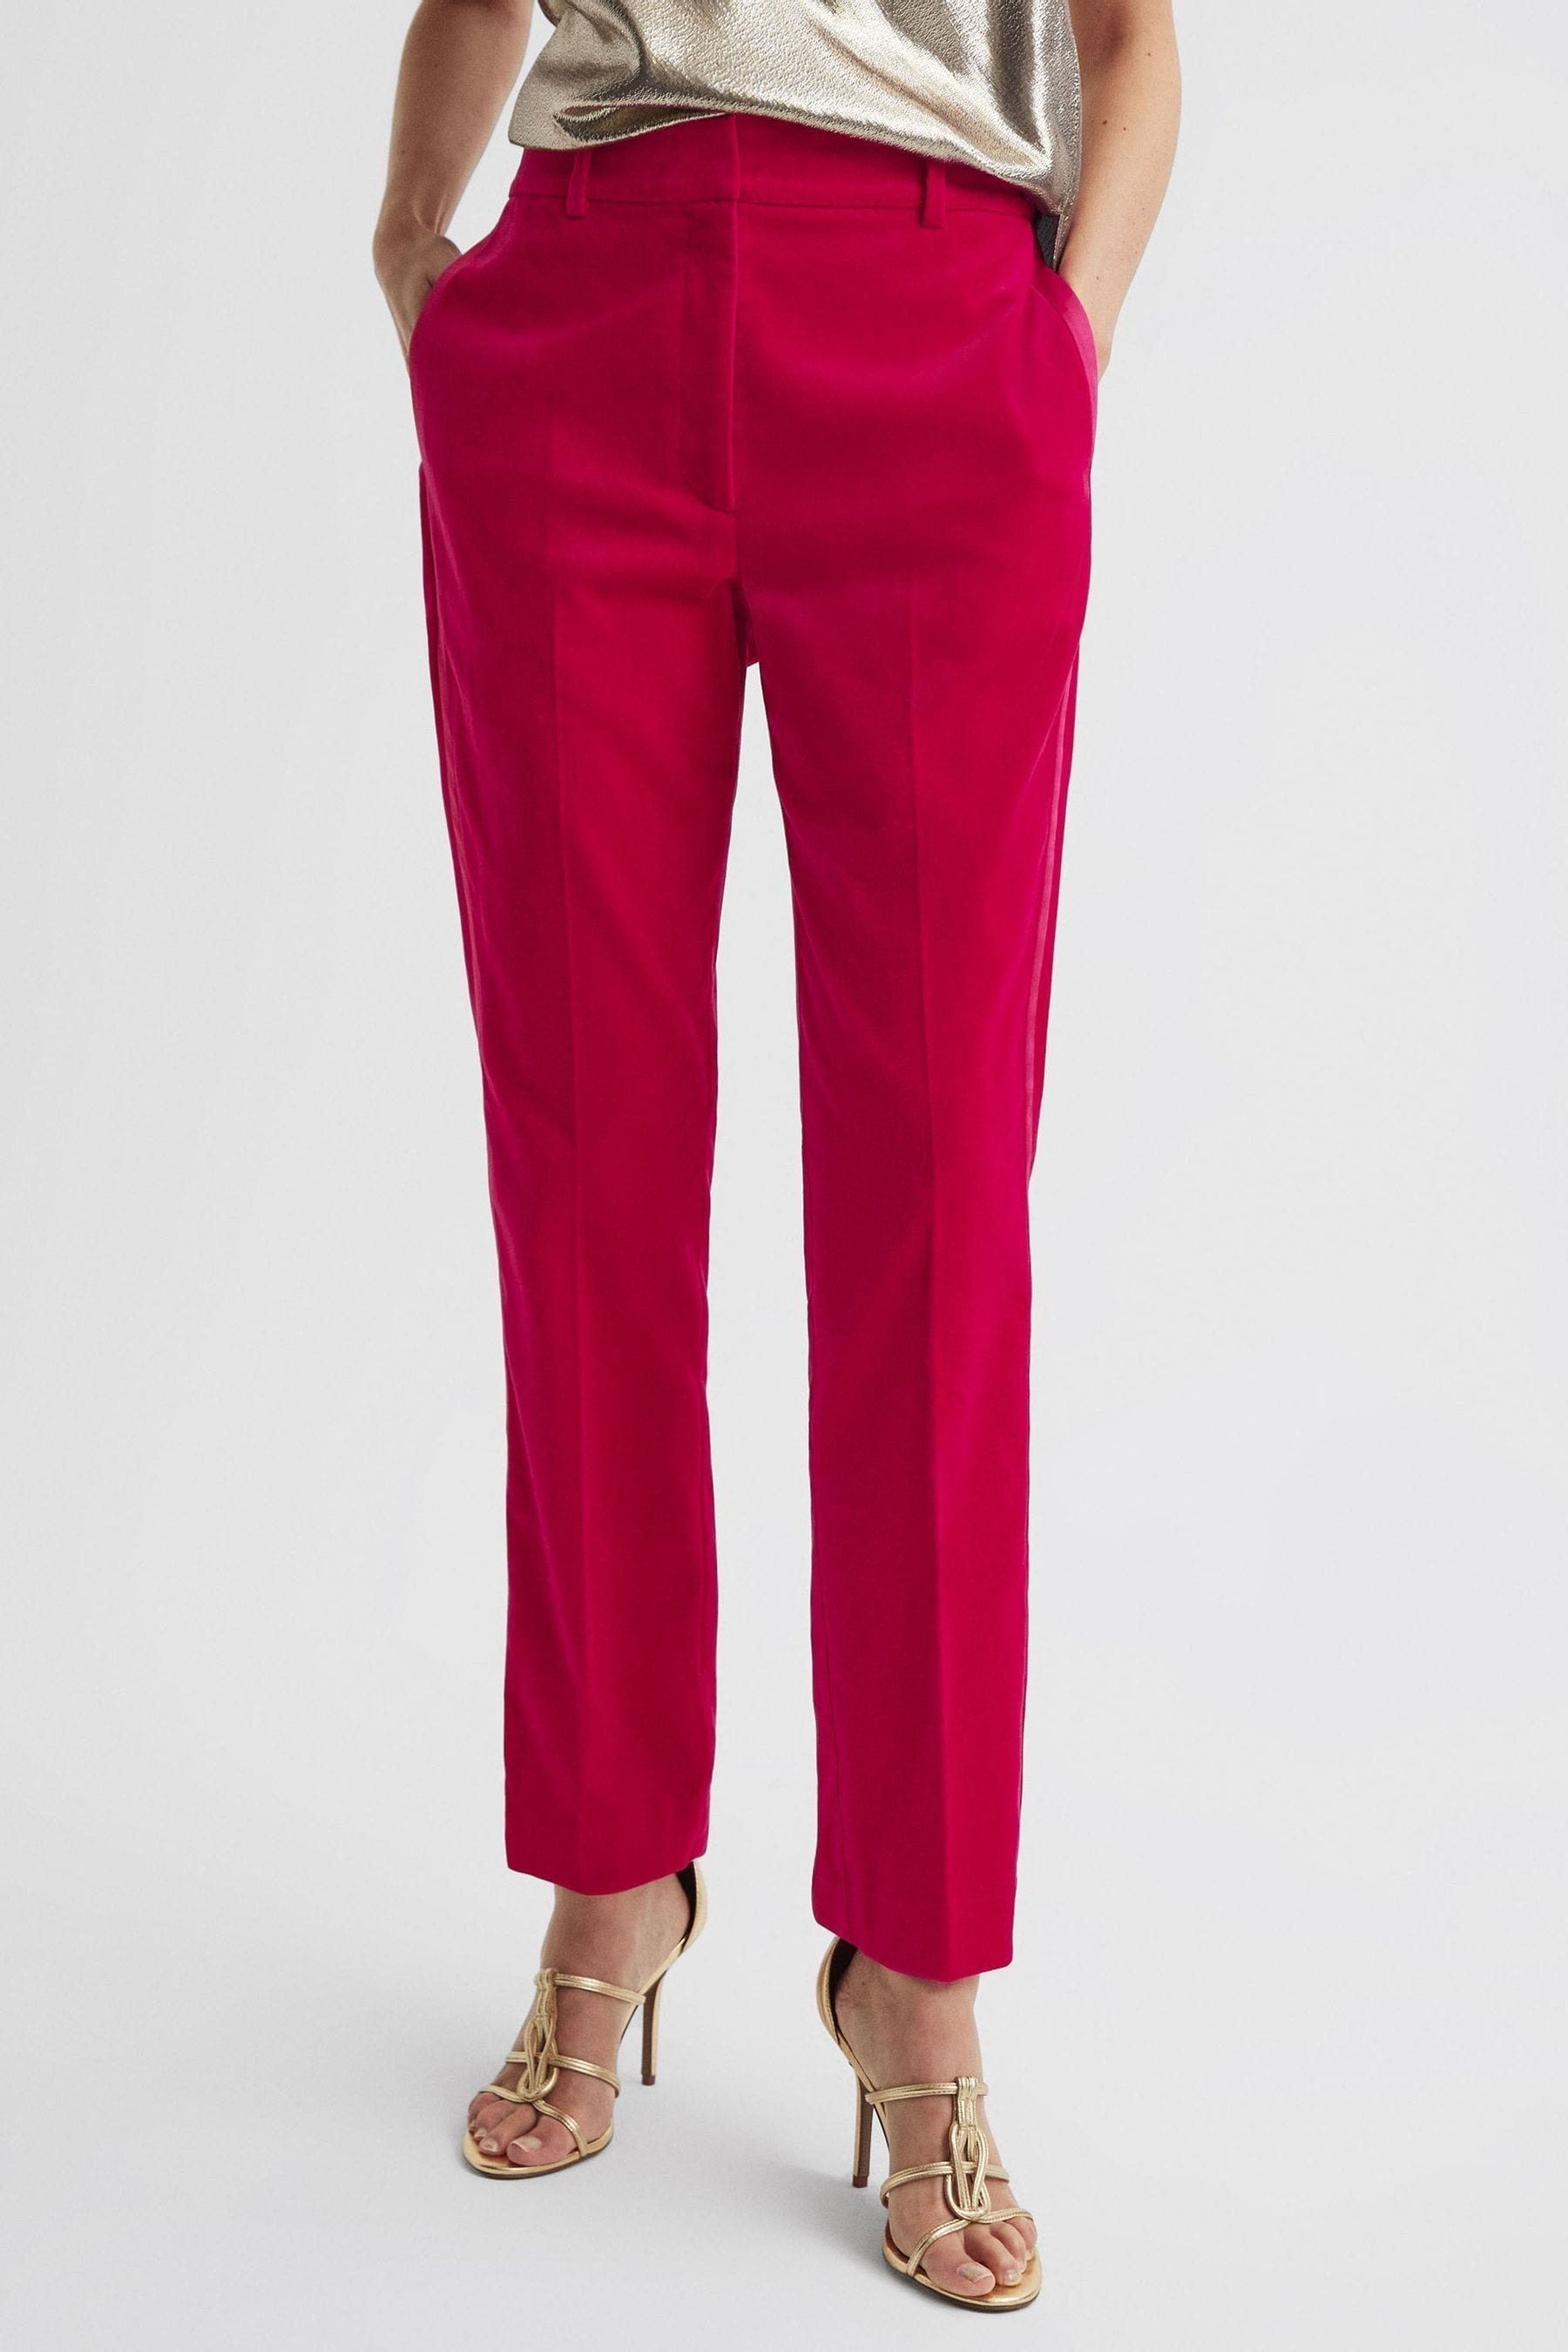 Shop Reiss Rosa - Pink Velvet Tapered Suit Trousers, Uk 14 R